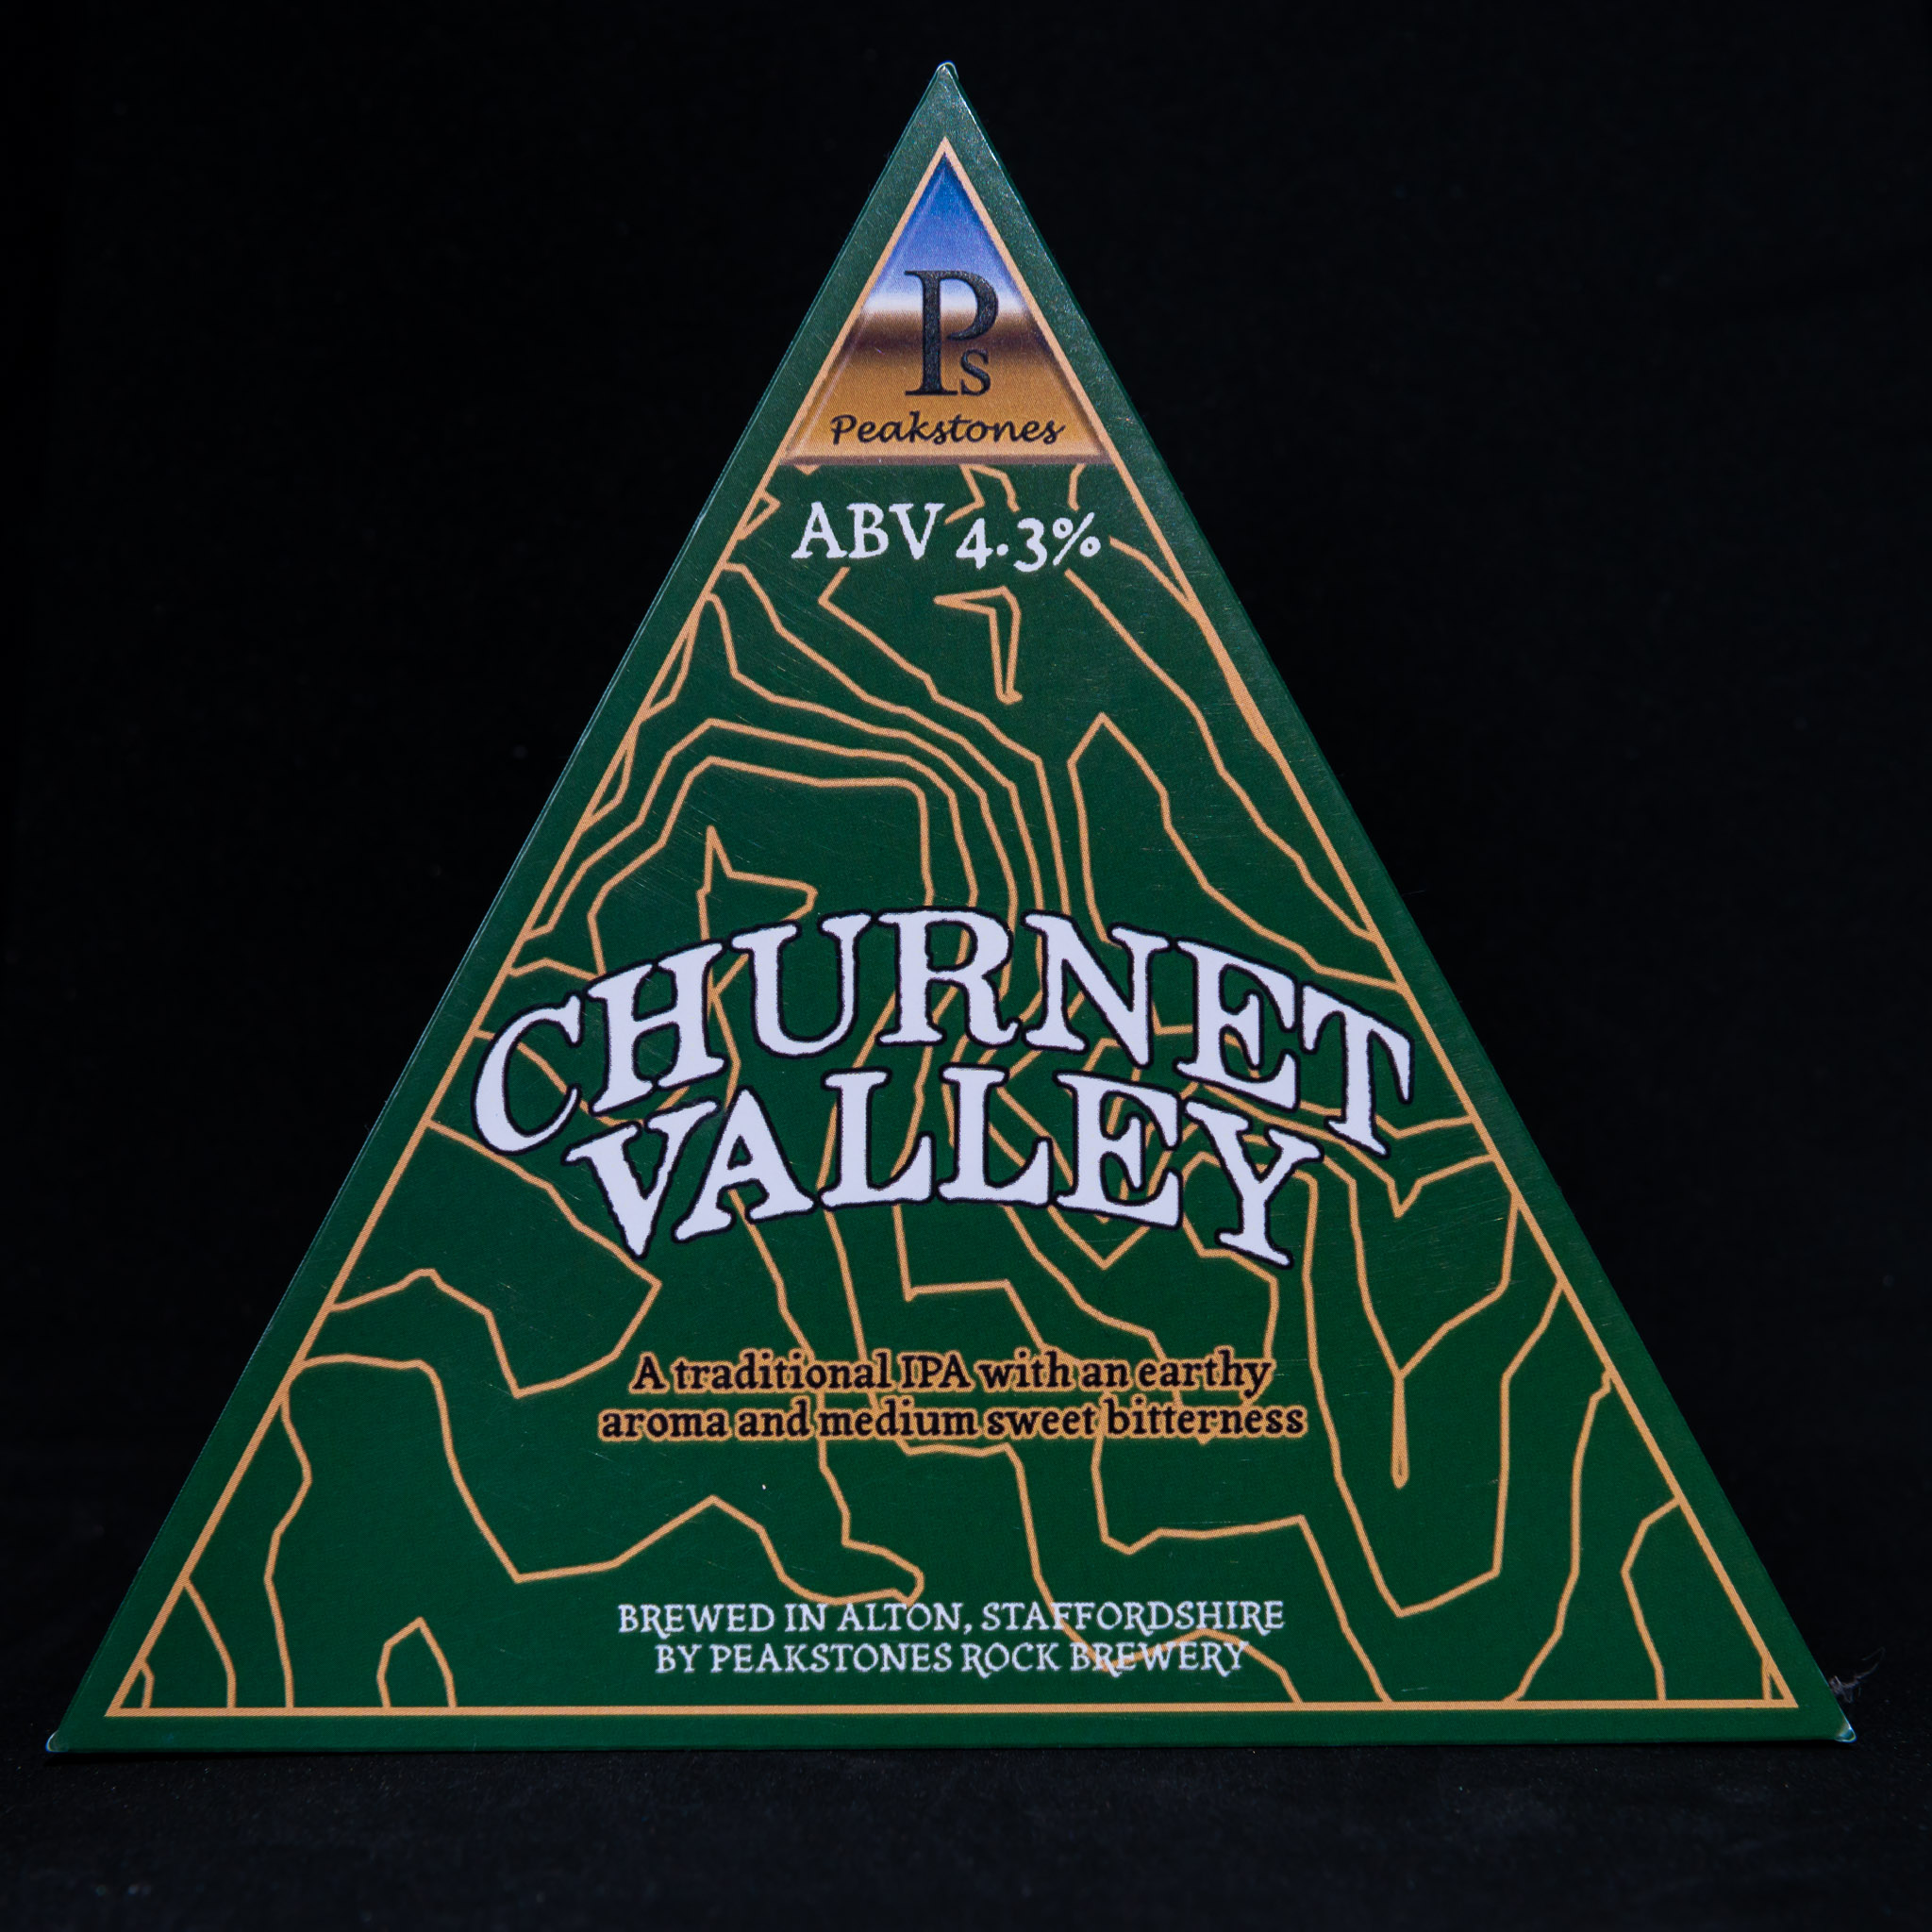 Churnet Valley IPA beer